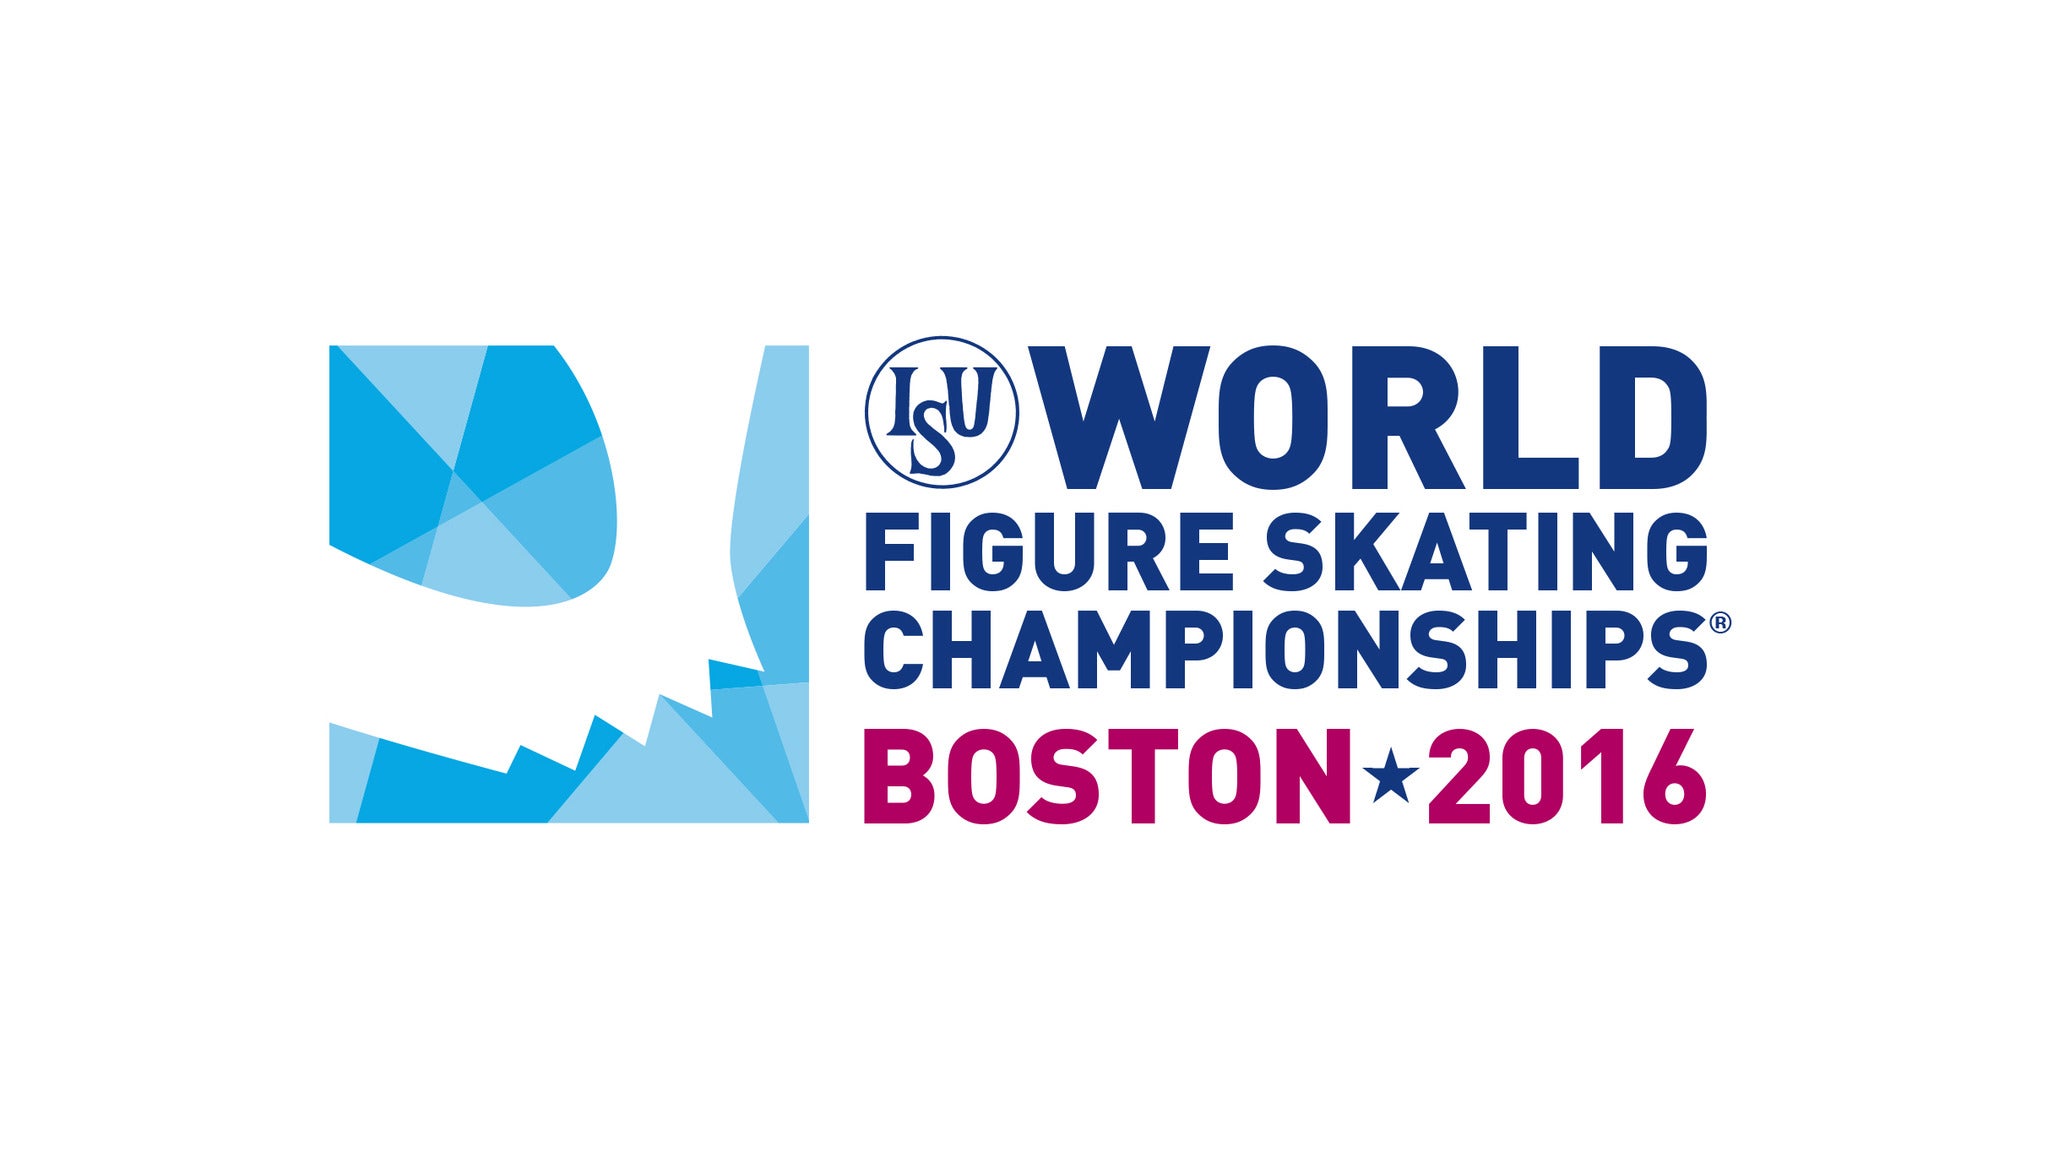 Worlds ISU Figure Skating Championship Tickets | Single Game Tickets